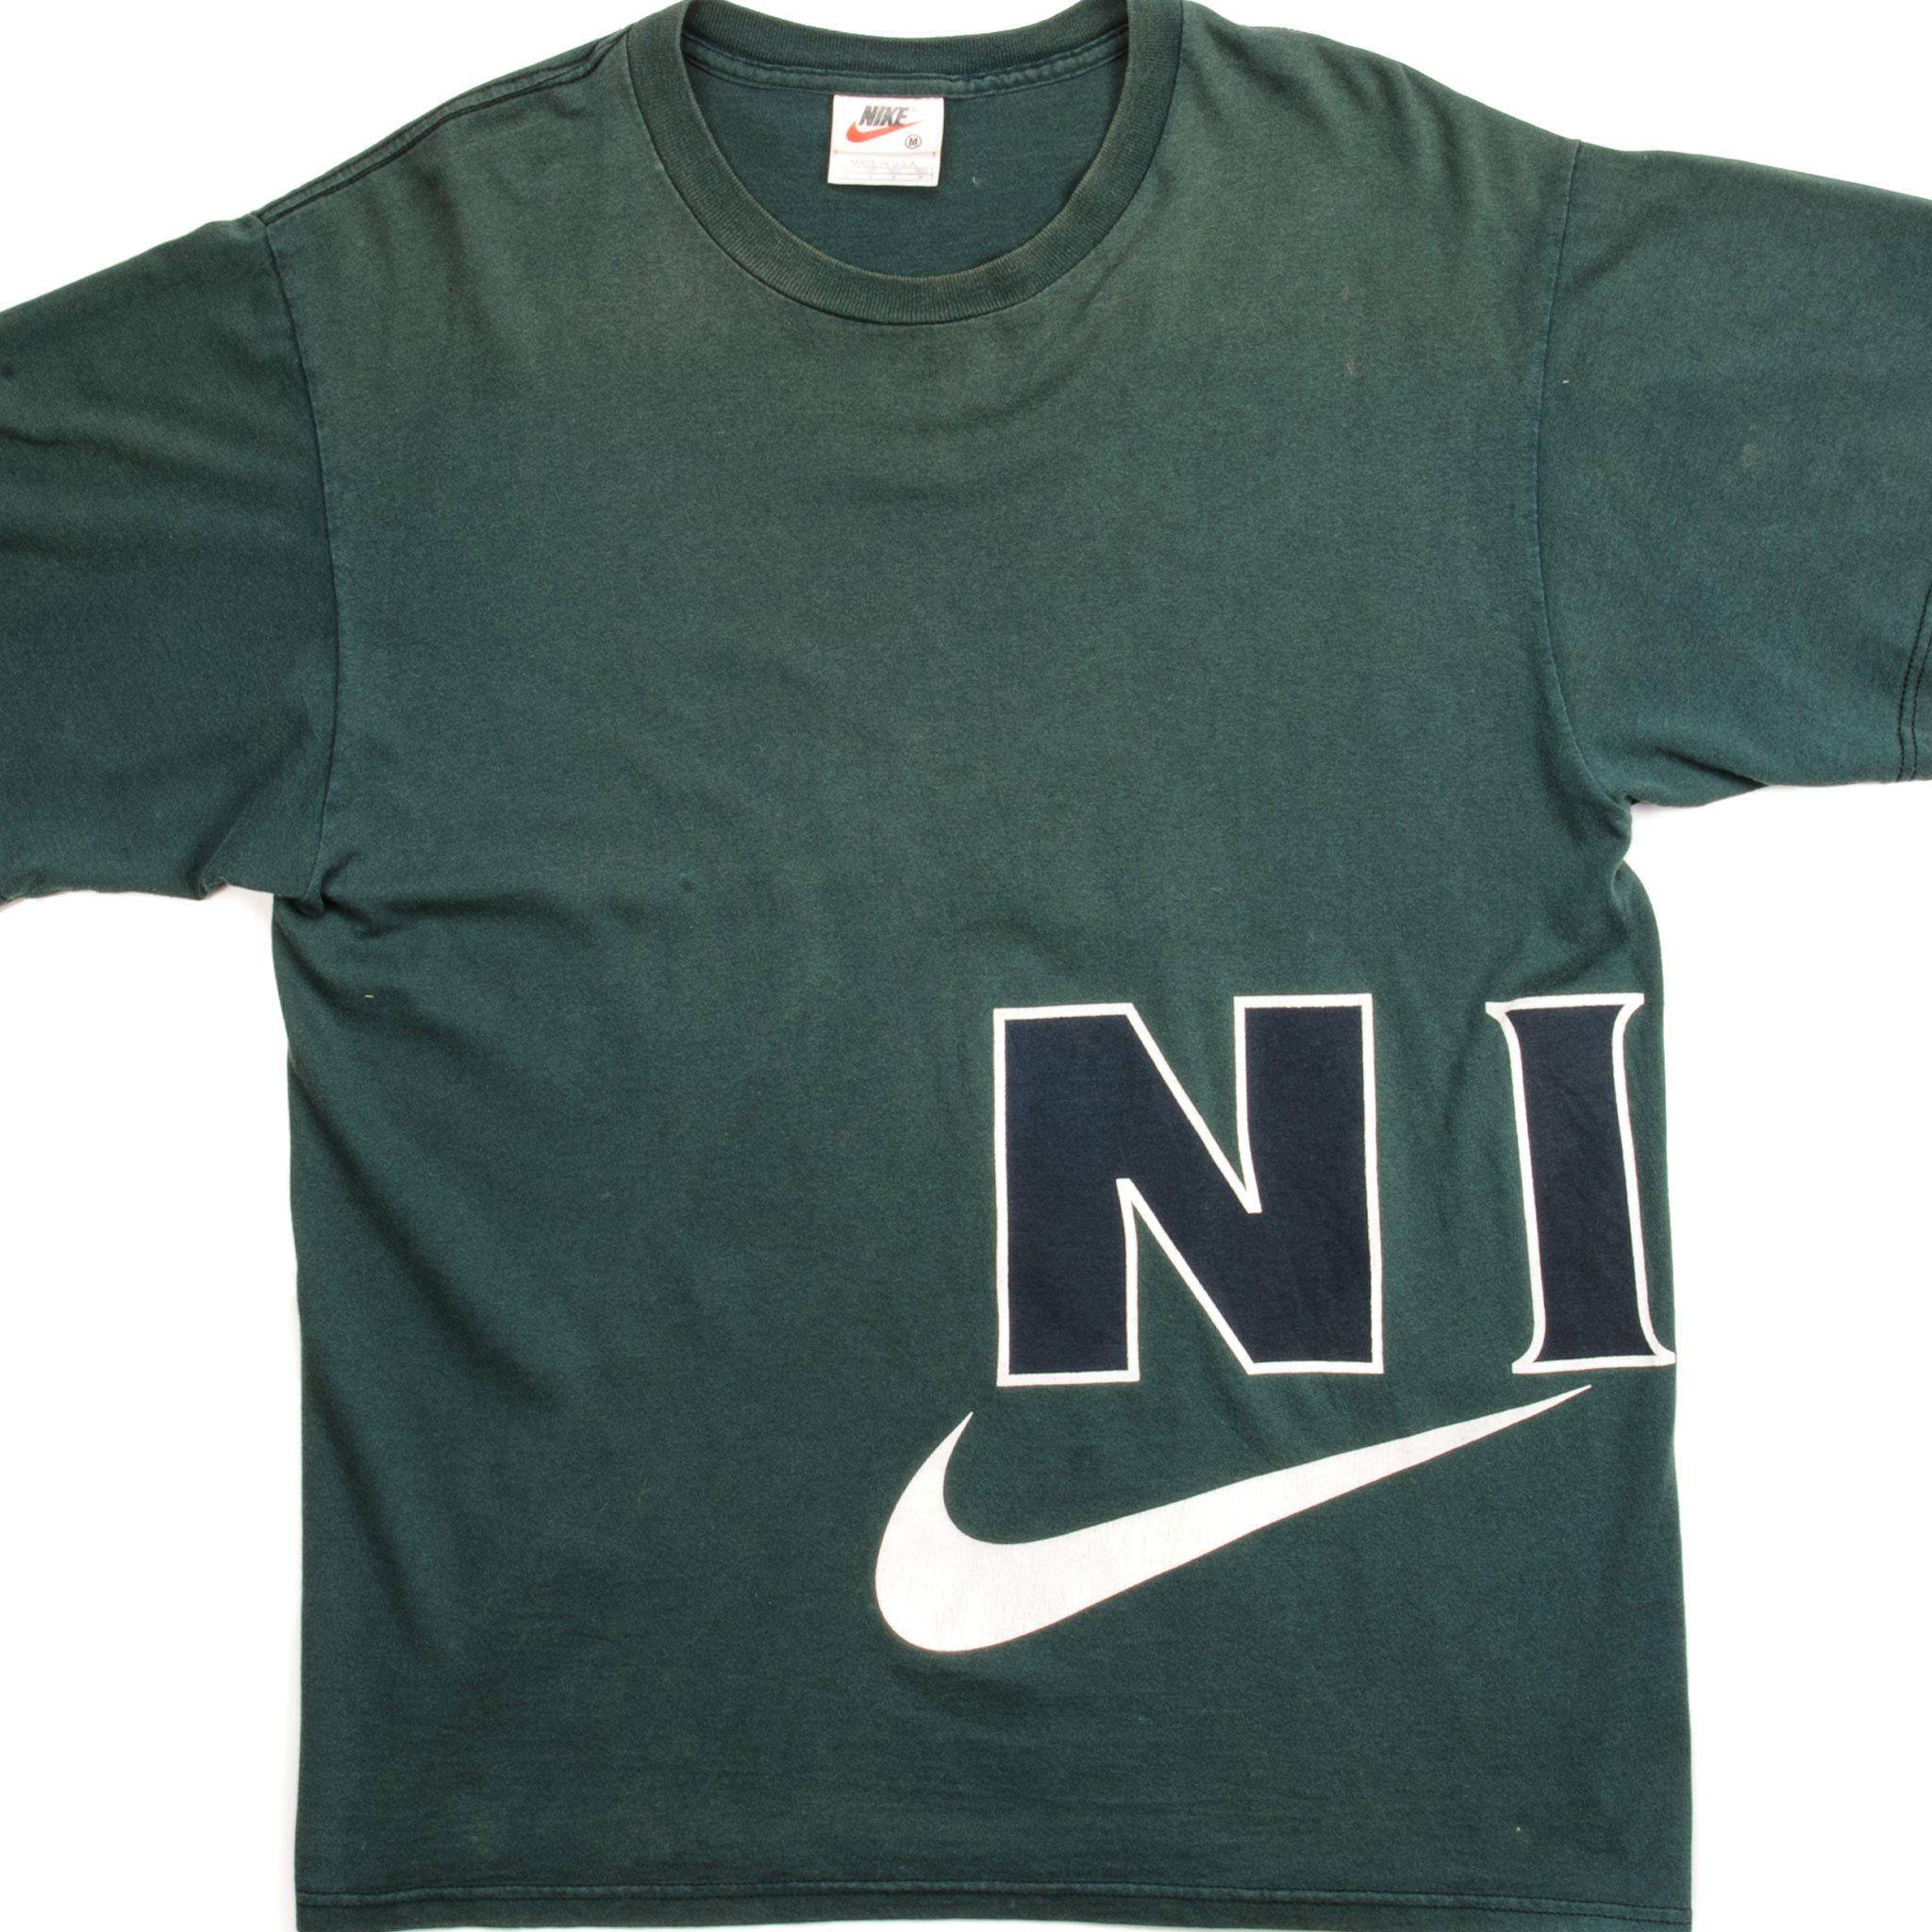 Vintage Nike Shirt Medium Made In USA – rare usa